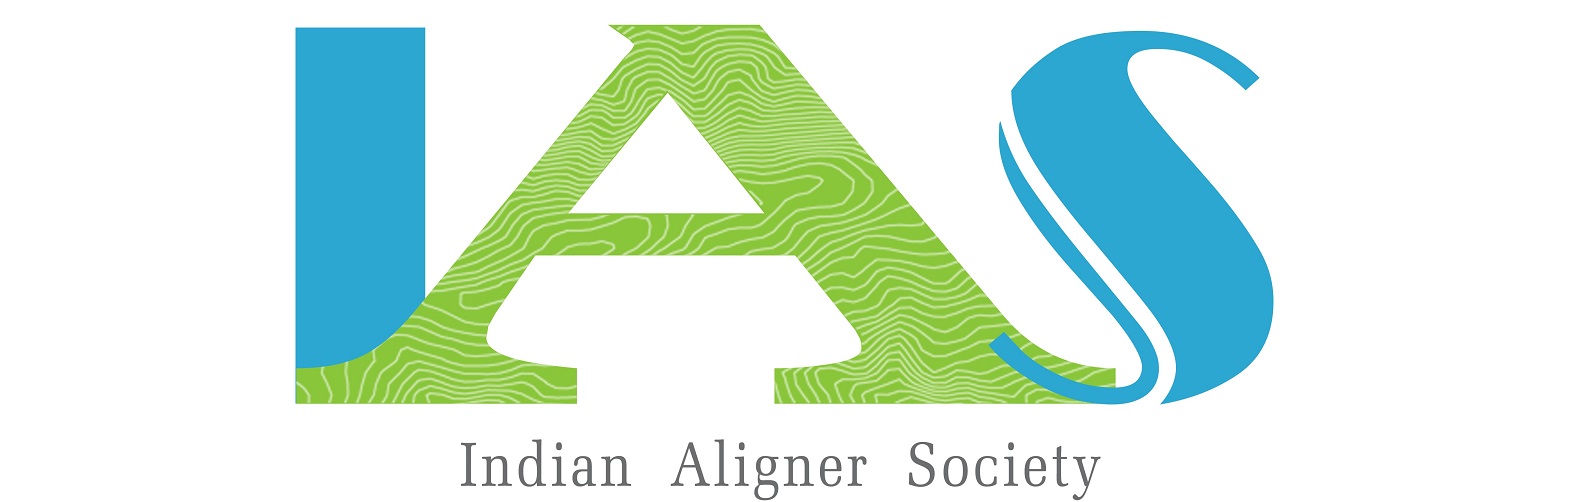 Indian Aligner Society - IAS - Logo